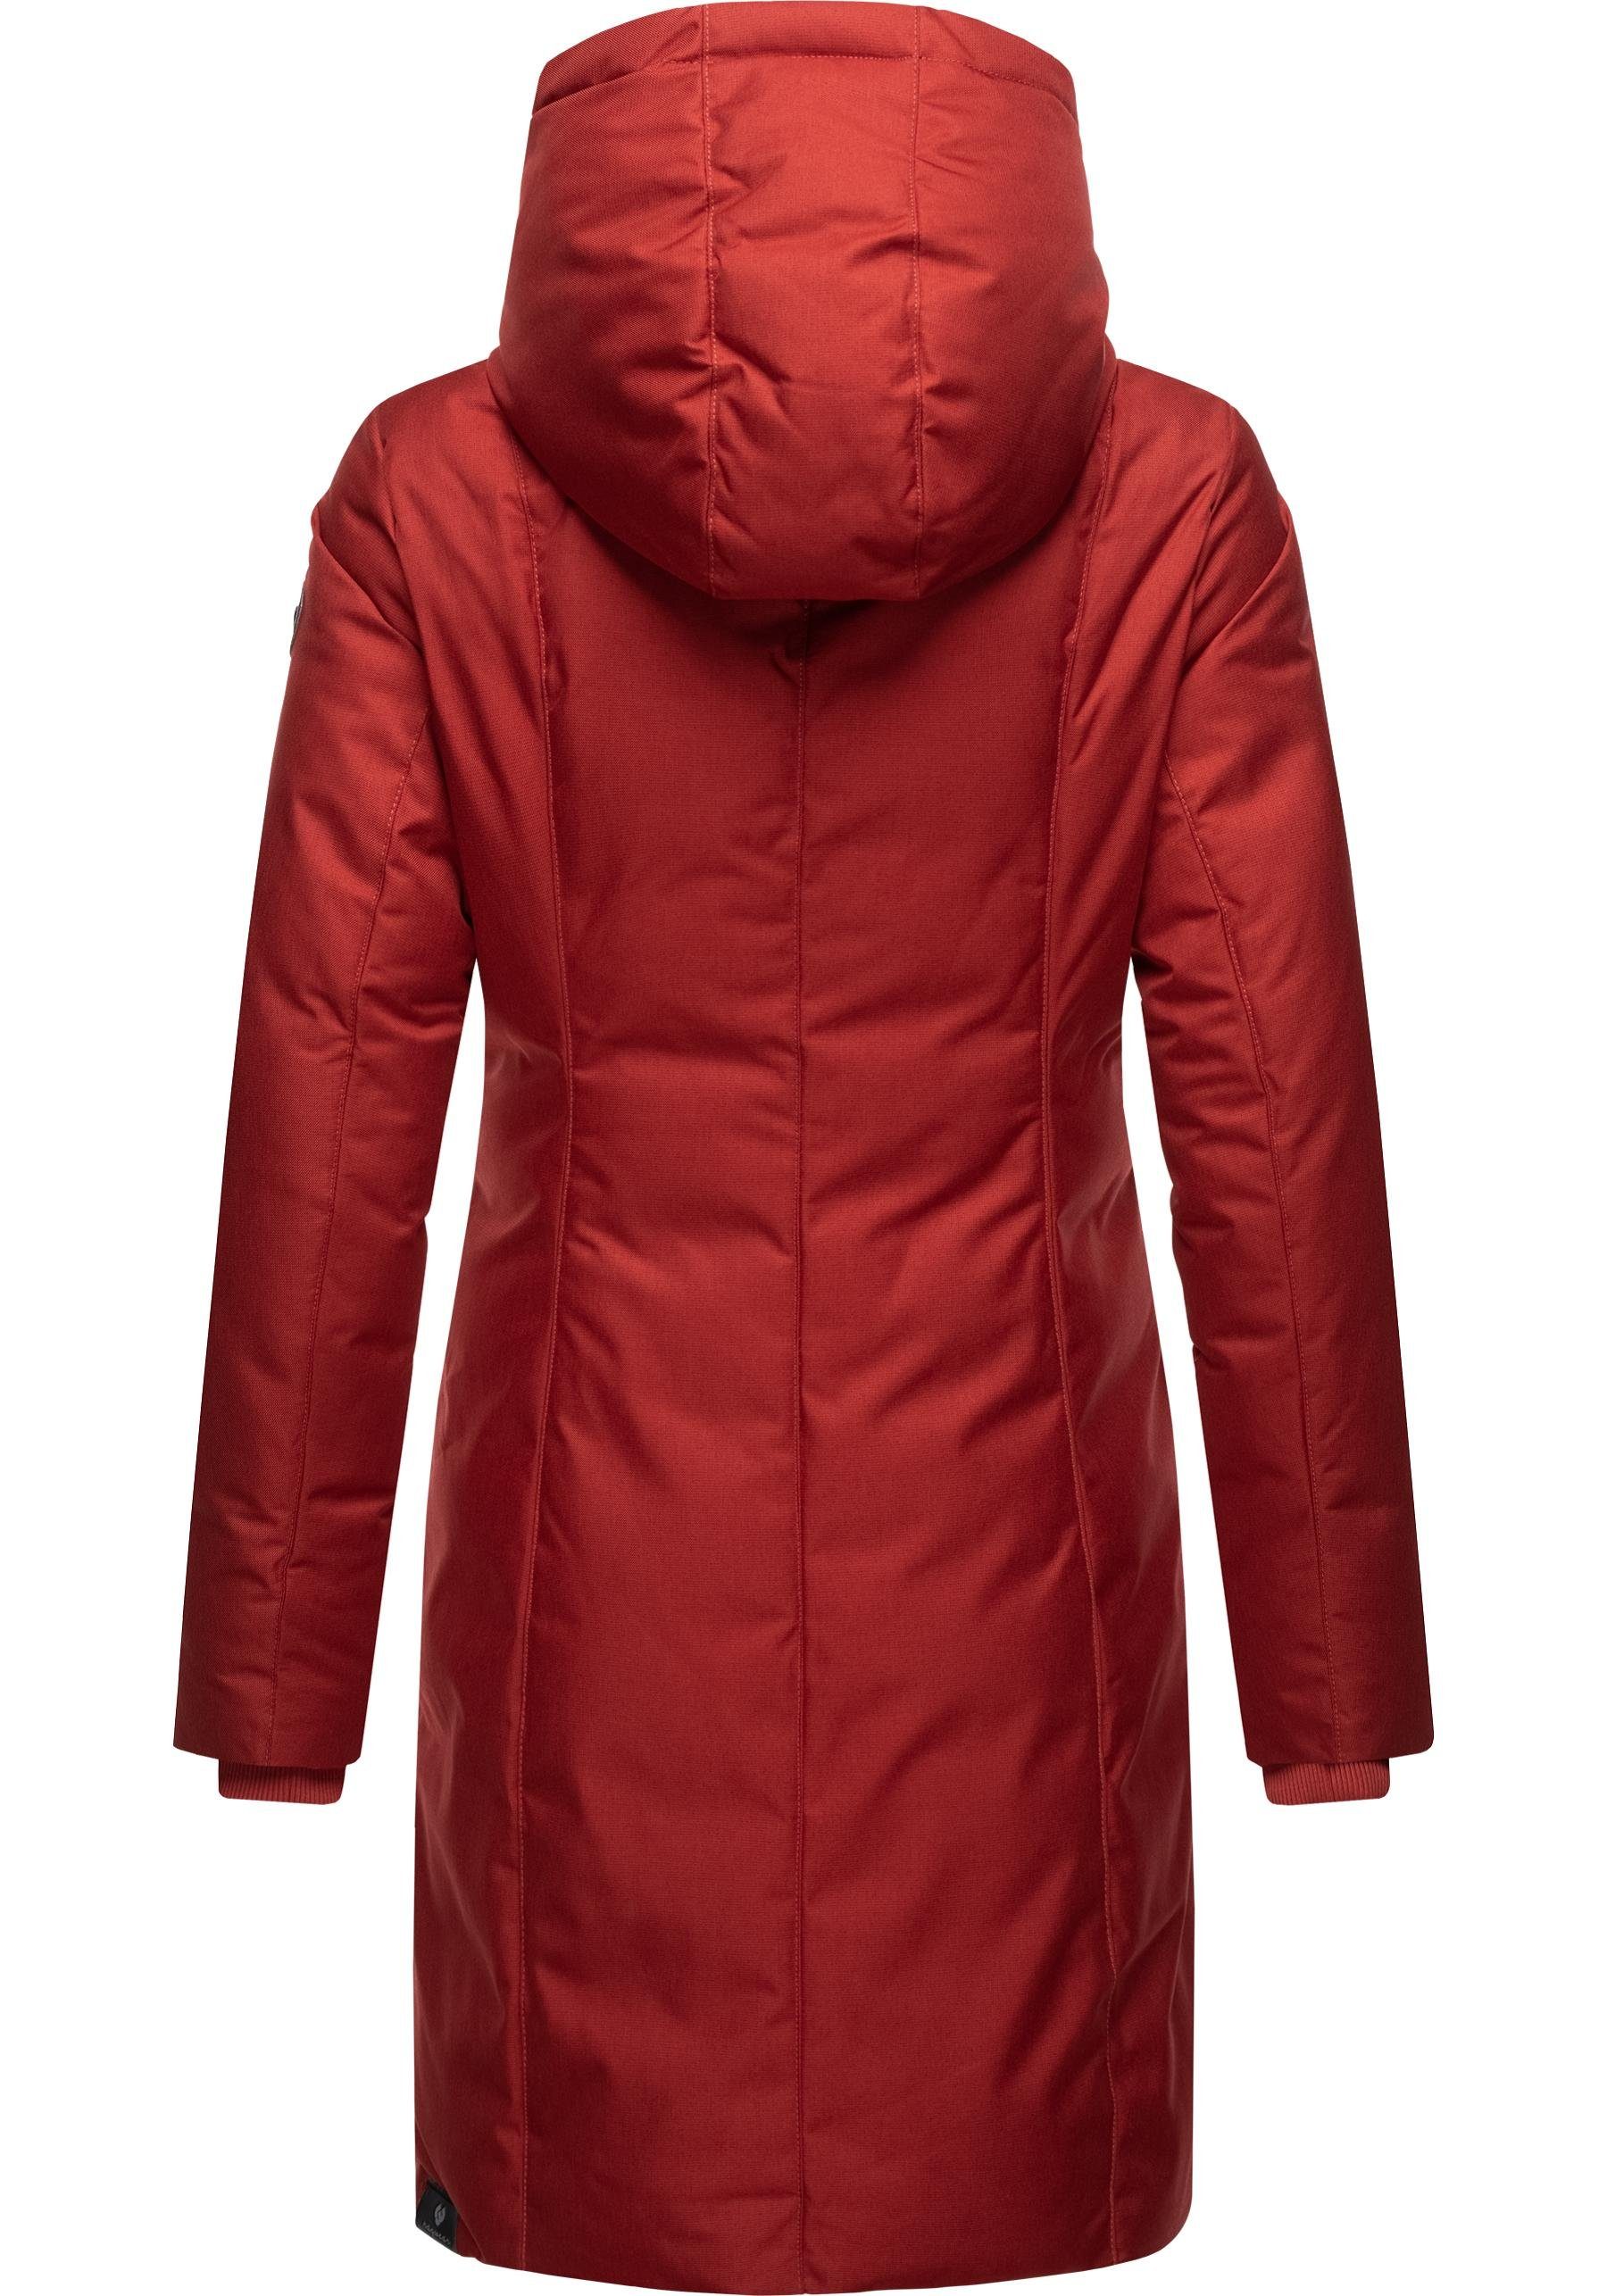 Winterparka stylischer mit Kapuze Wintermantel großer rot Ragwear Amarri